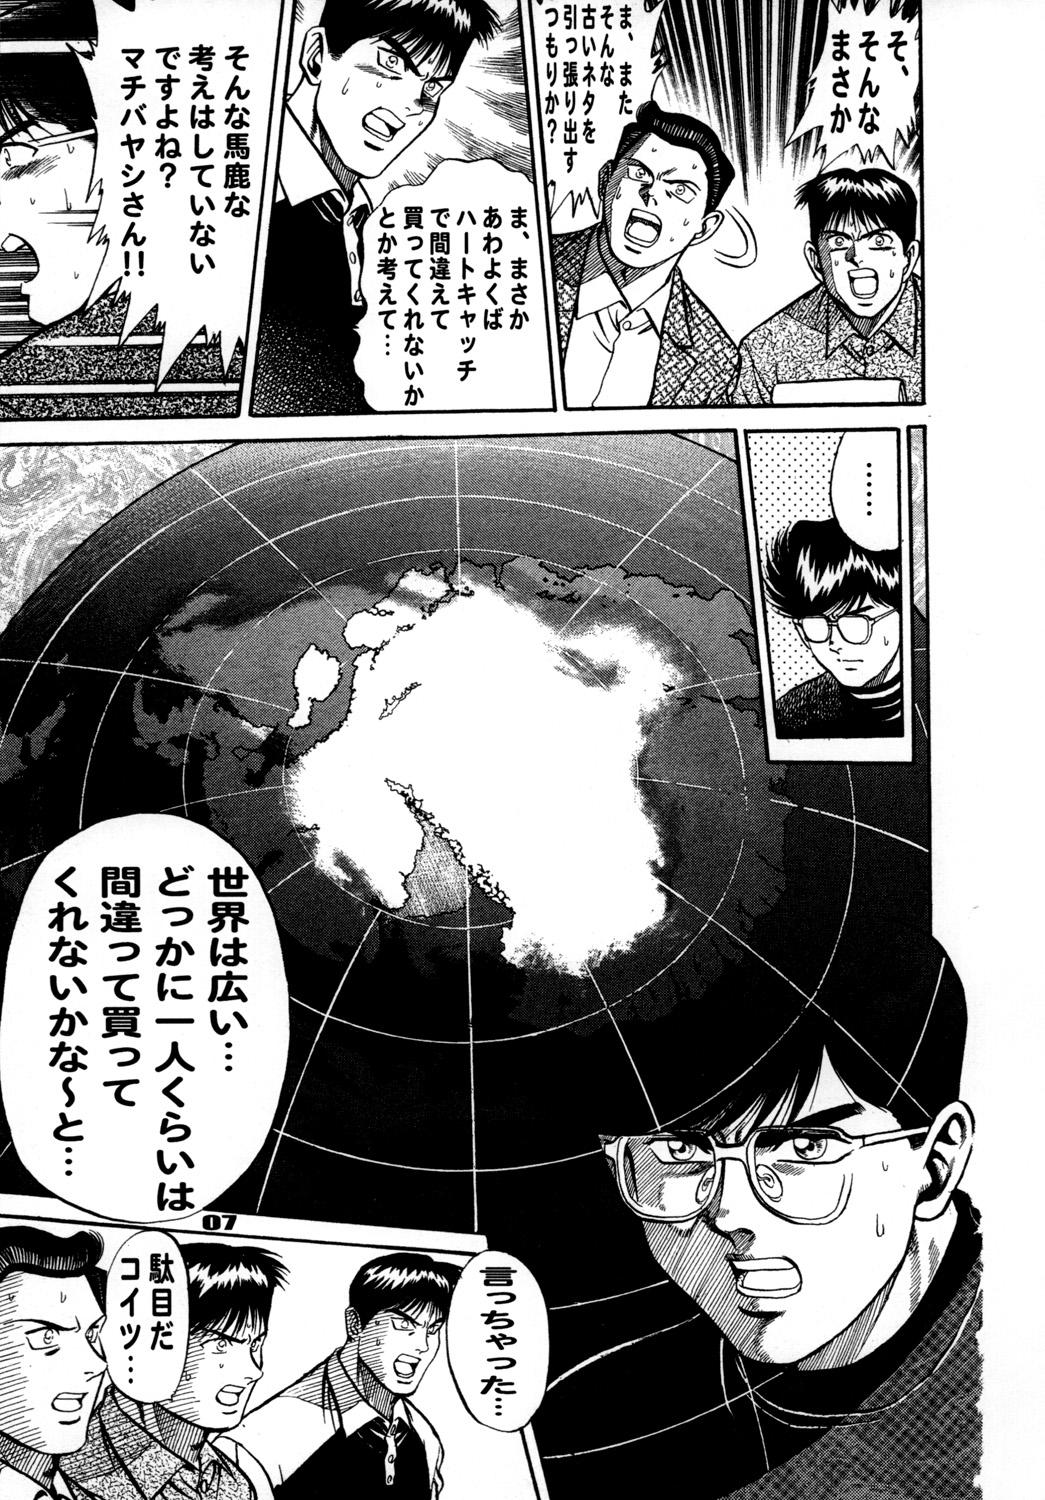 Grandpa Heart Catch Izumi-chan Dynamite 2 - Heart catch izumi-chan Zorra - Page 6